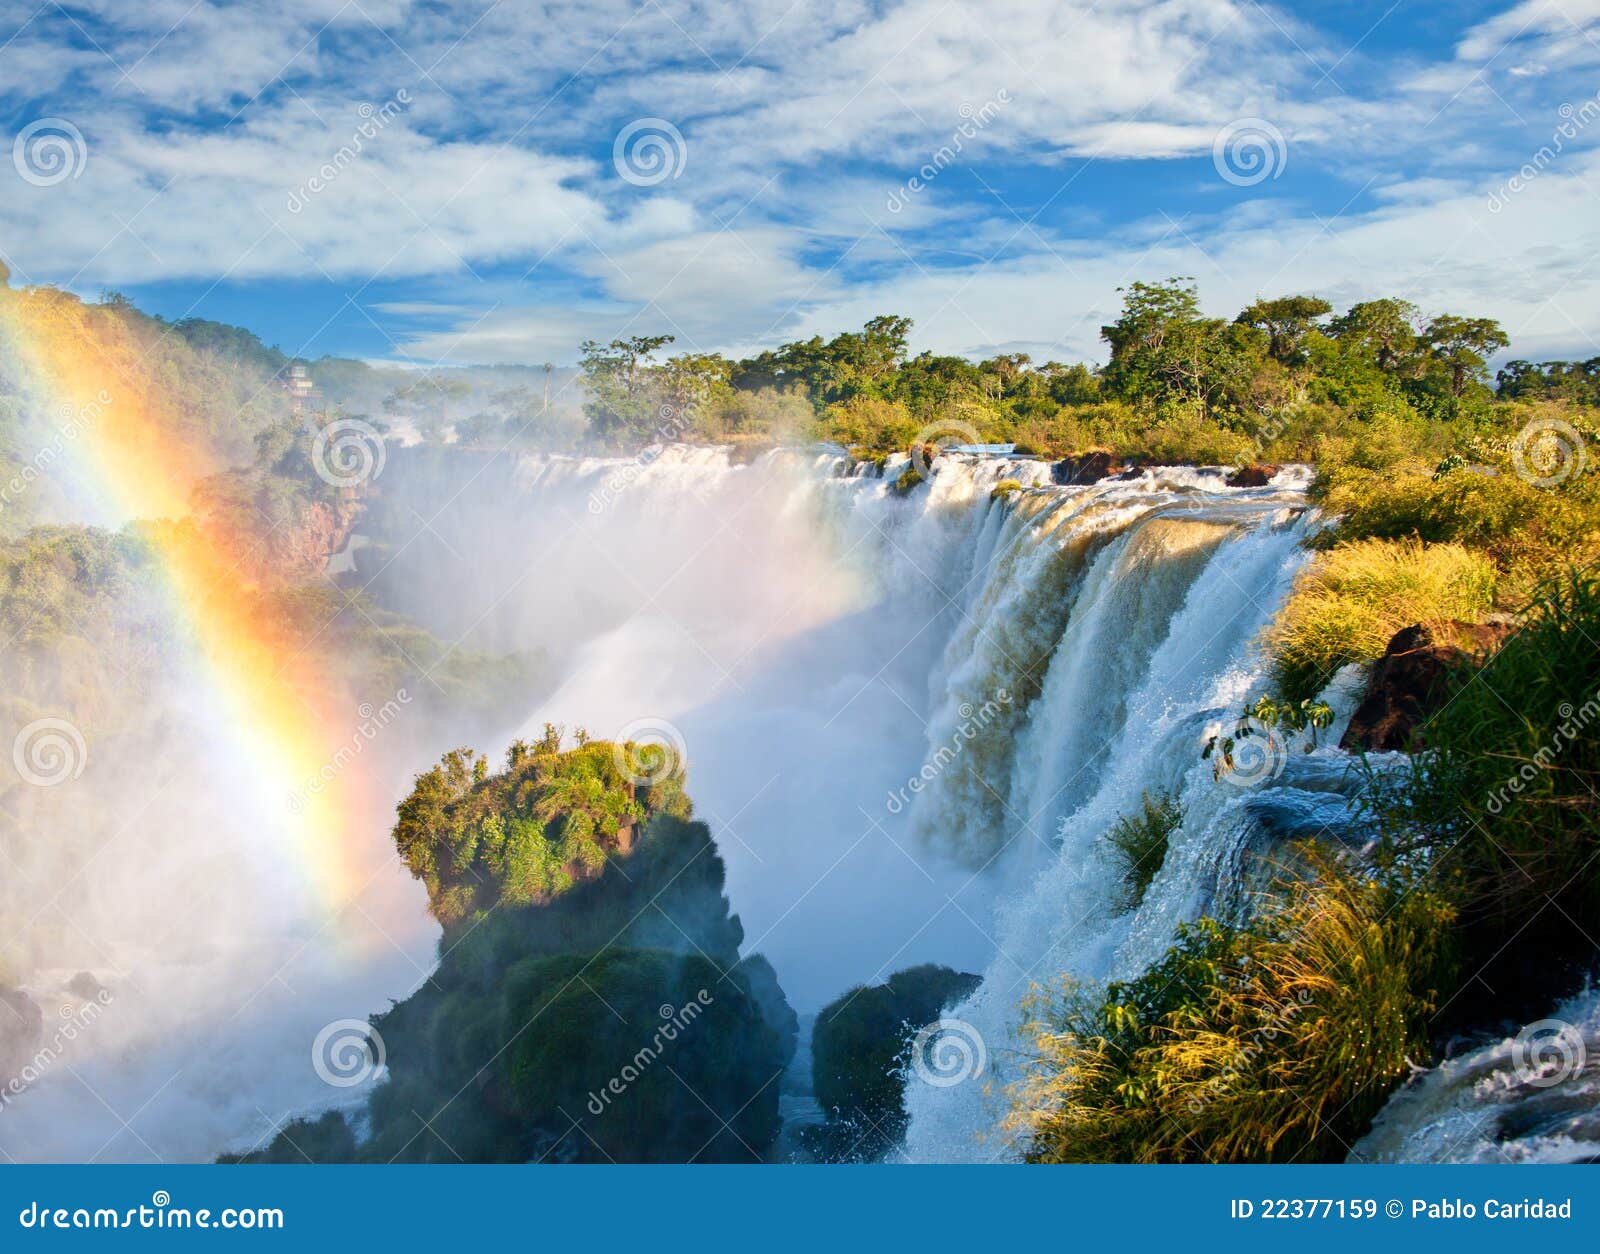 iguazu falls, argentina.